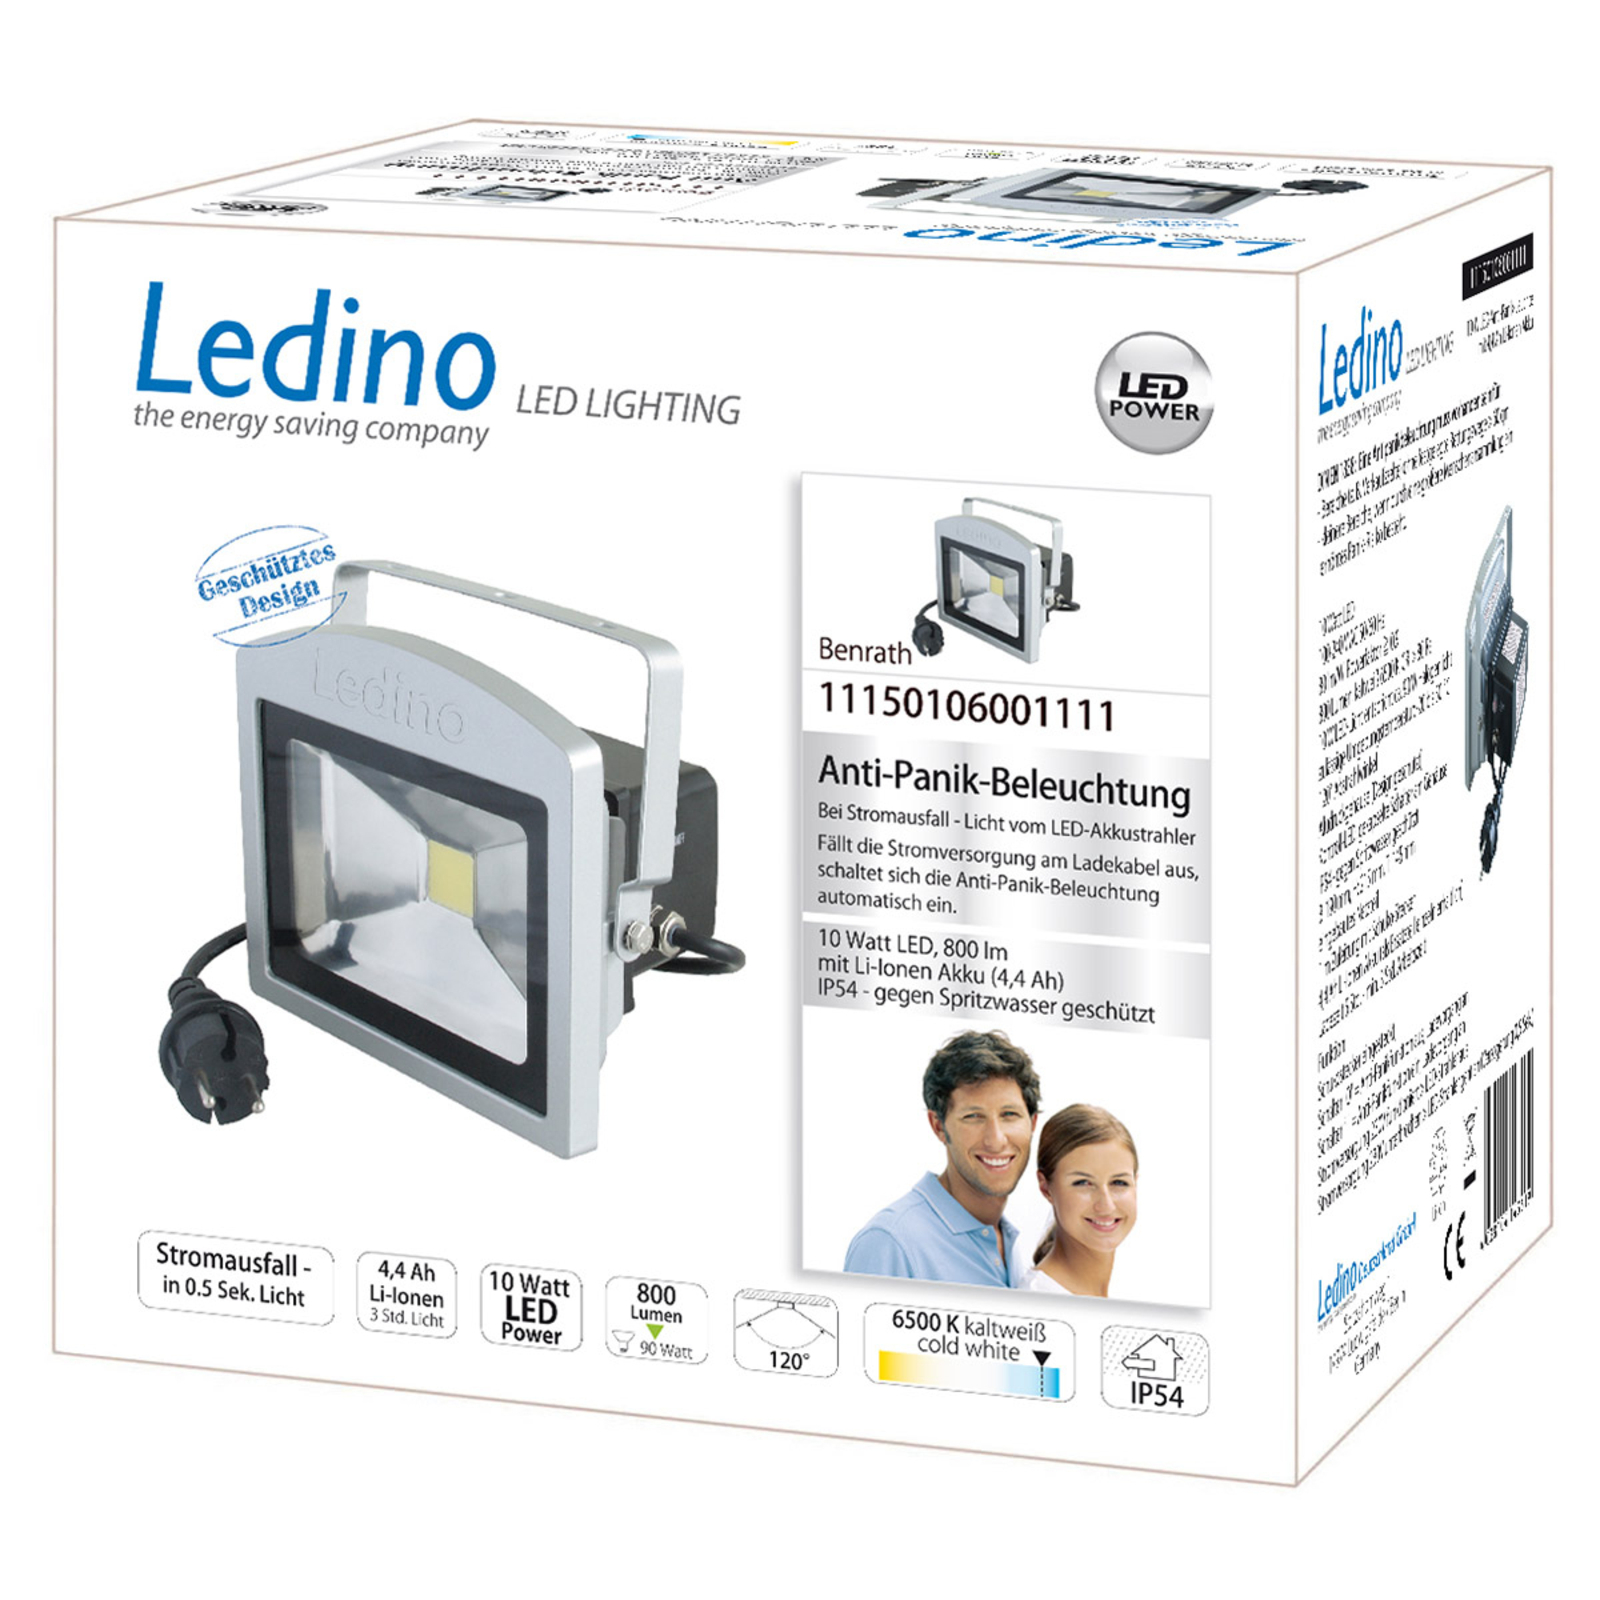 Benrath LED spotlight, anti-panic light, battery